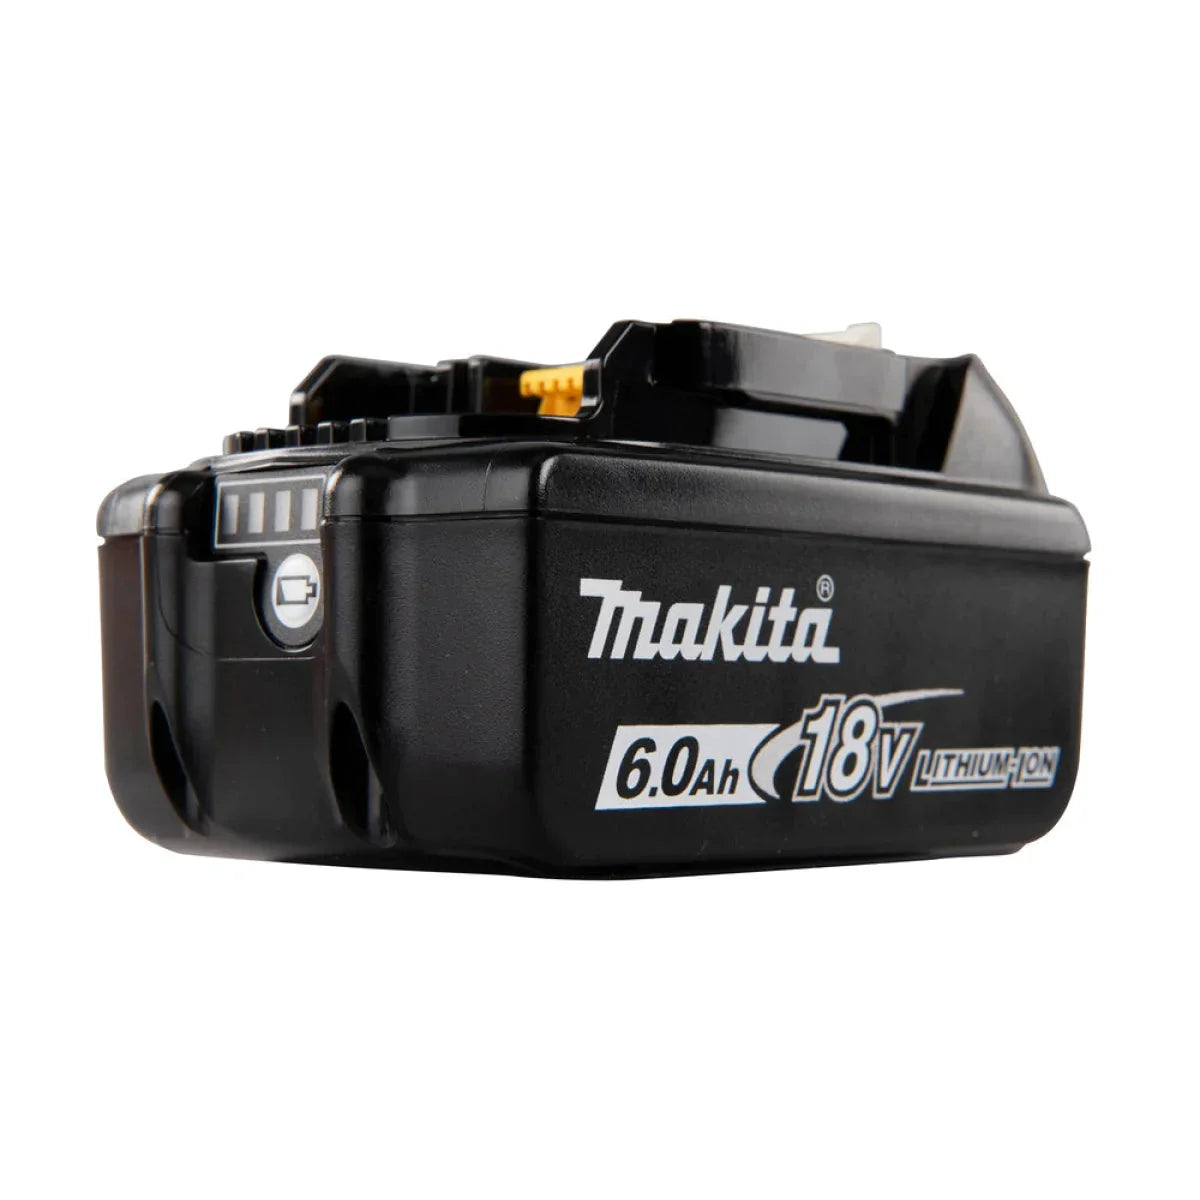 Makita-BL1860B 18V - 6.0Ah-Werkzeug-Akku 18V-Masori.de